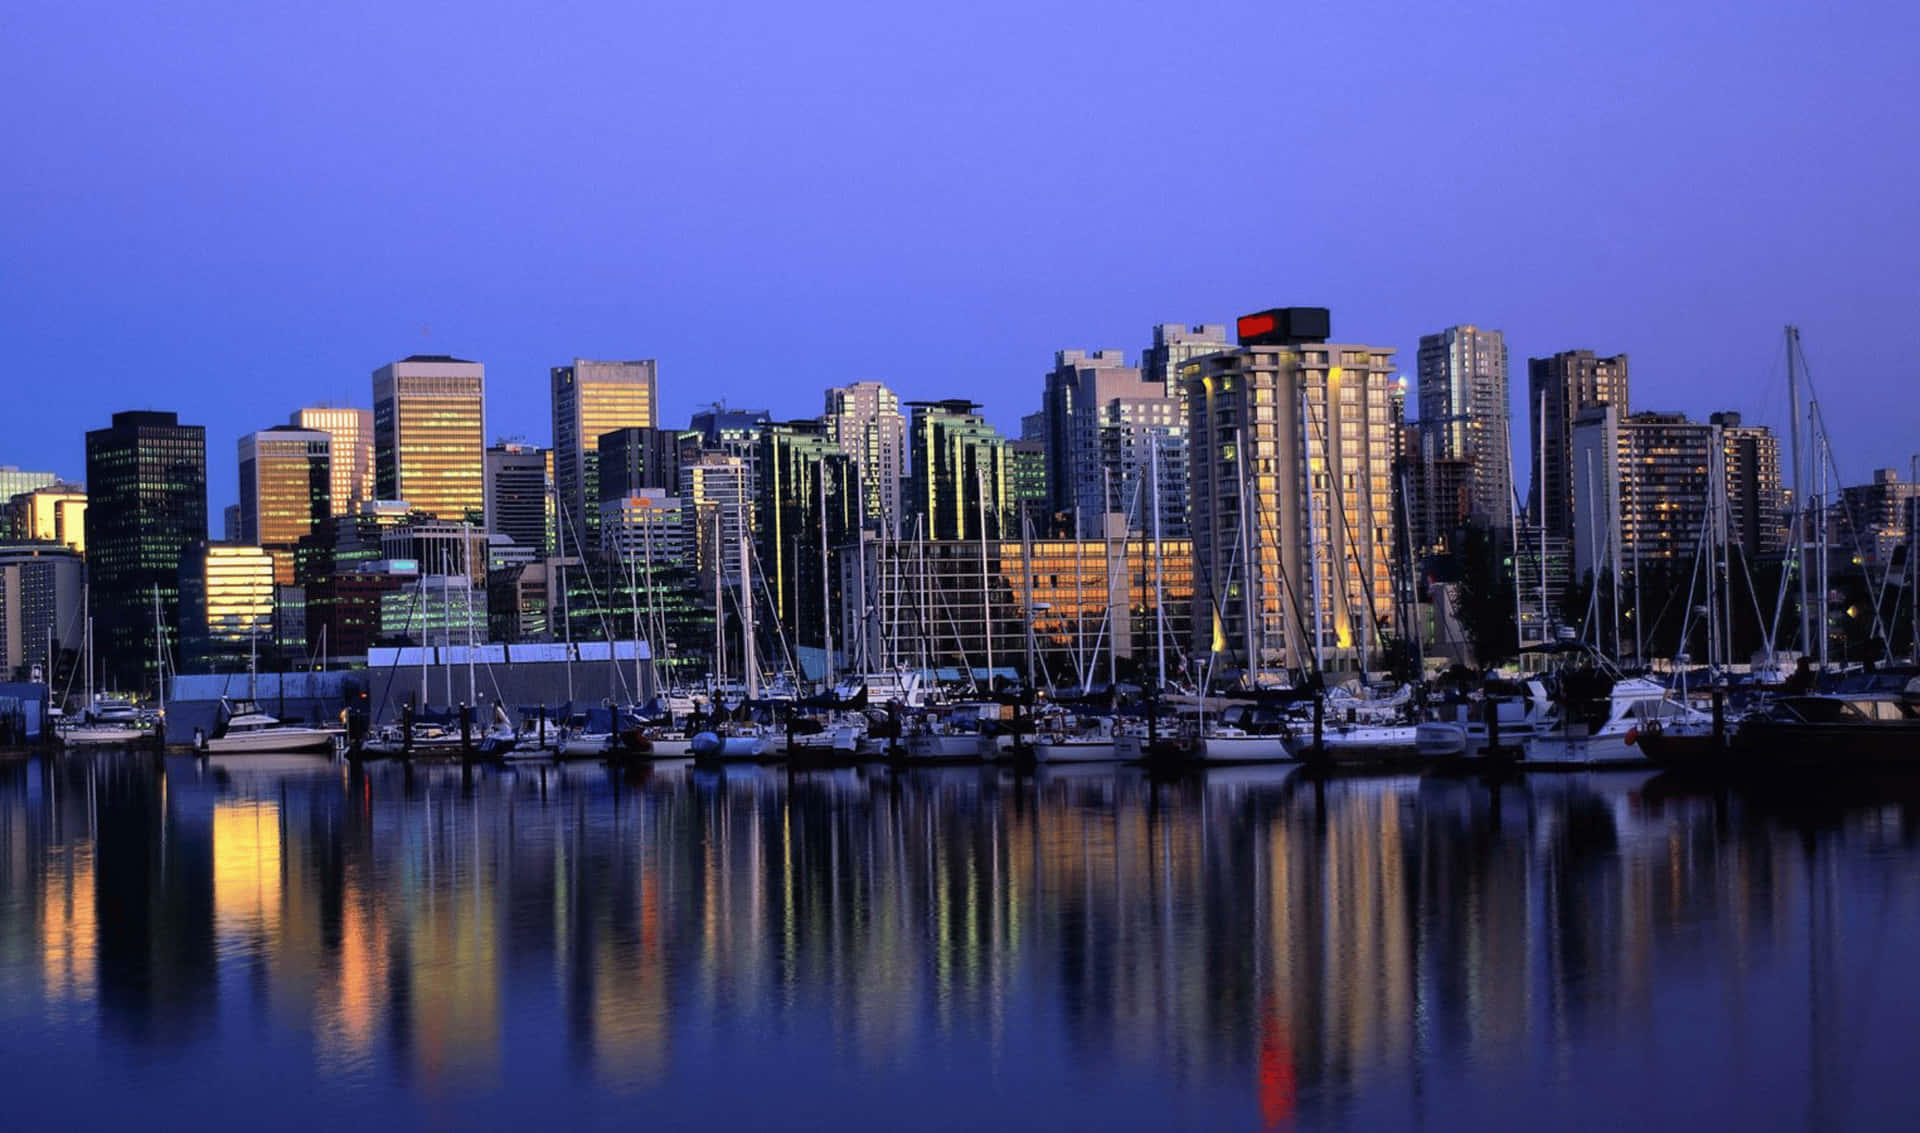 Vancouverhamn 2440x1440 Bildskärmsbakgrund.